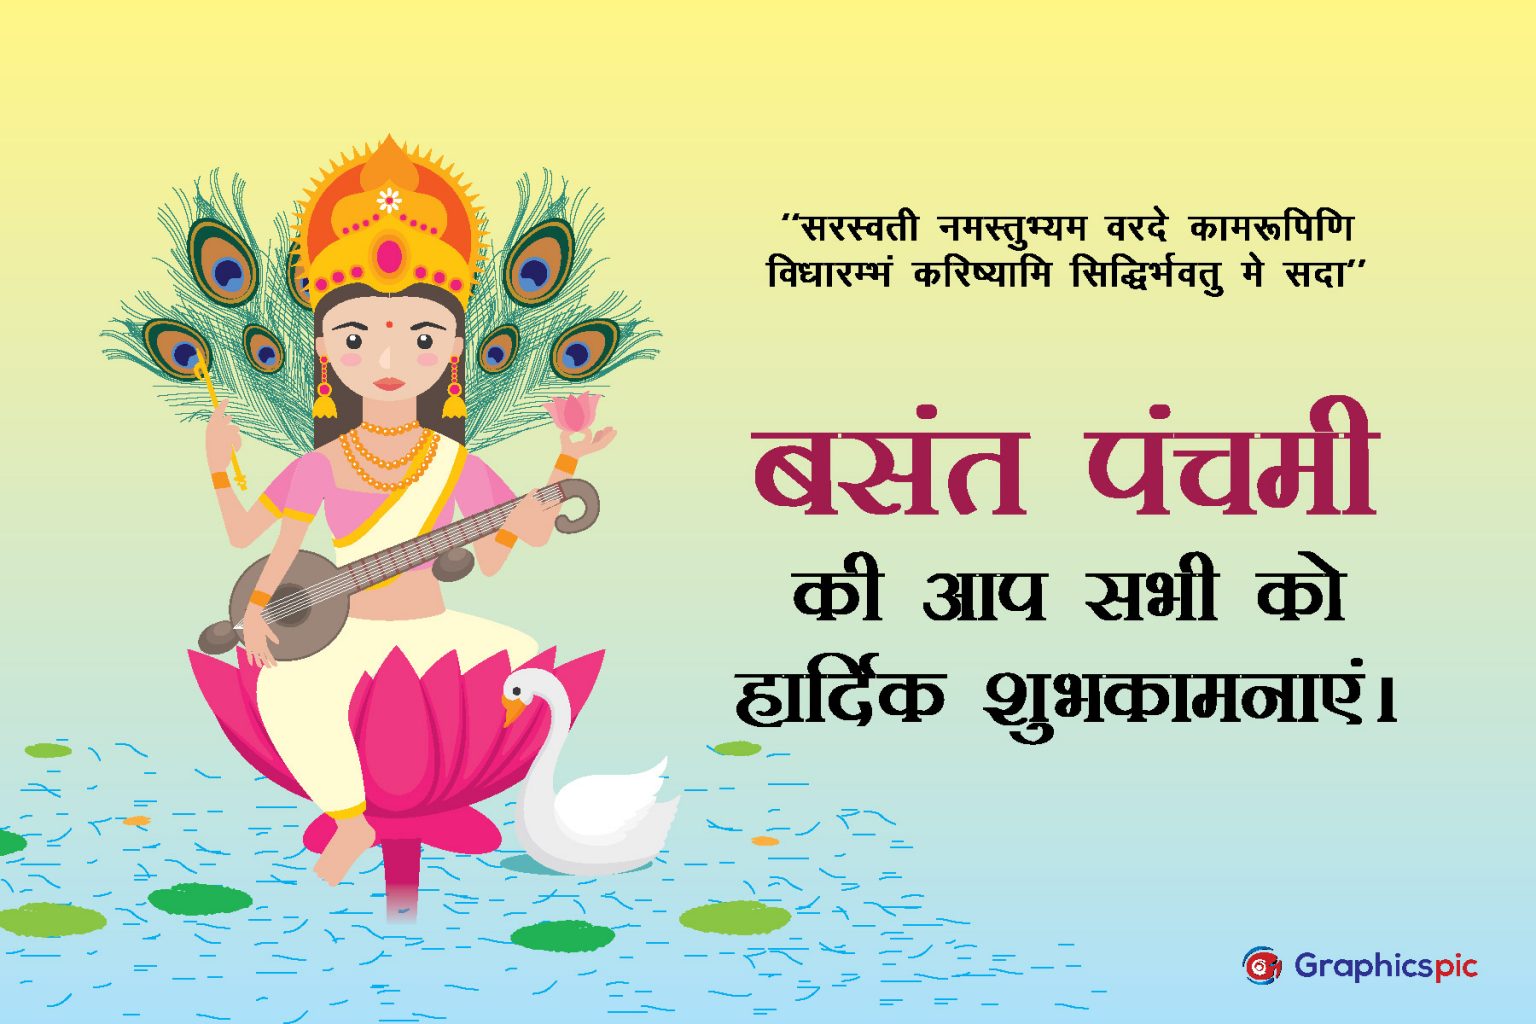 Happy Vasant Panchami Indian Festival Maa Saraswati Puja Free Vector Graphics Pic 